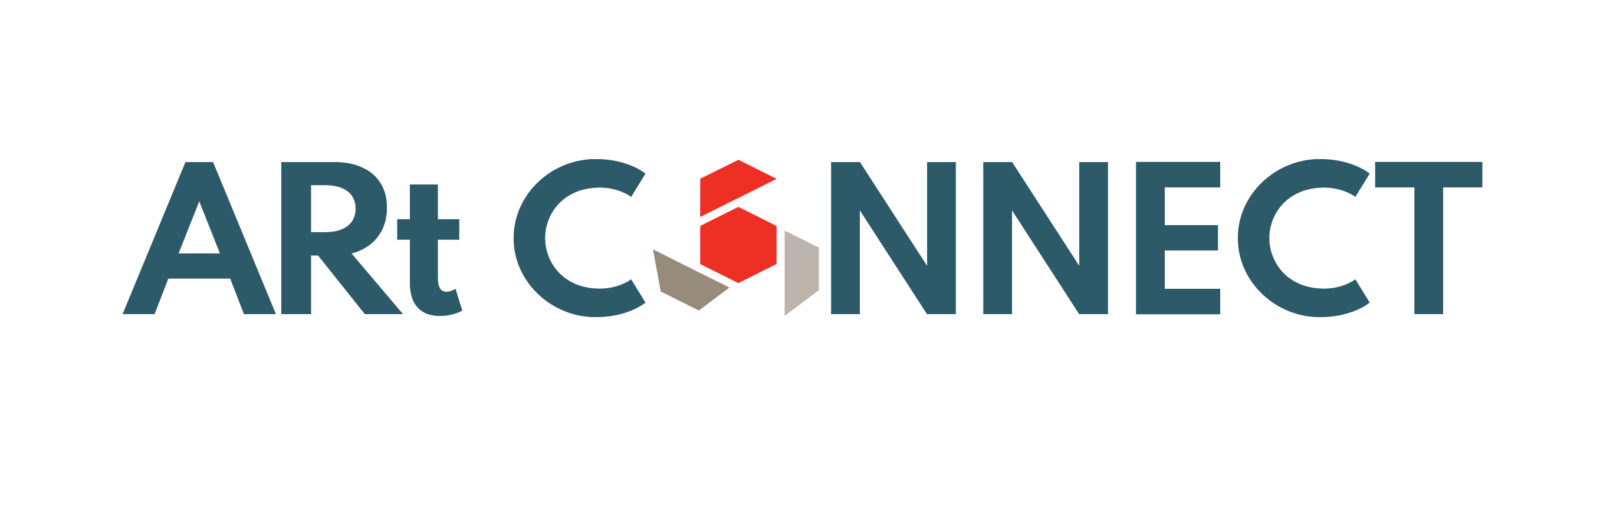 ARt Connect logo